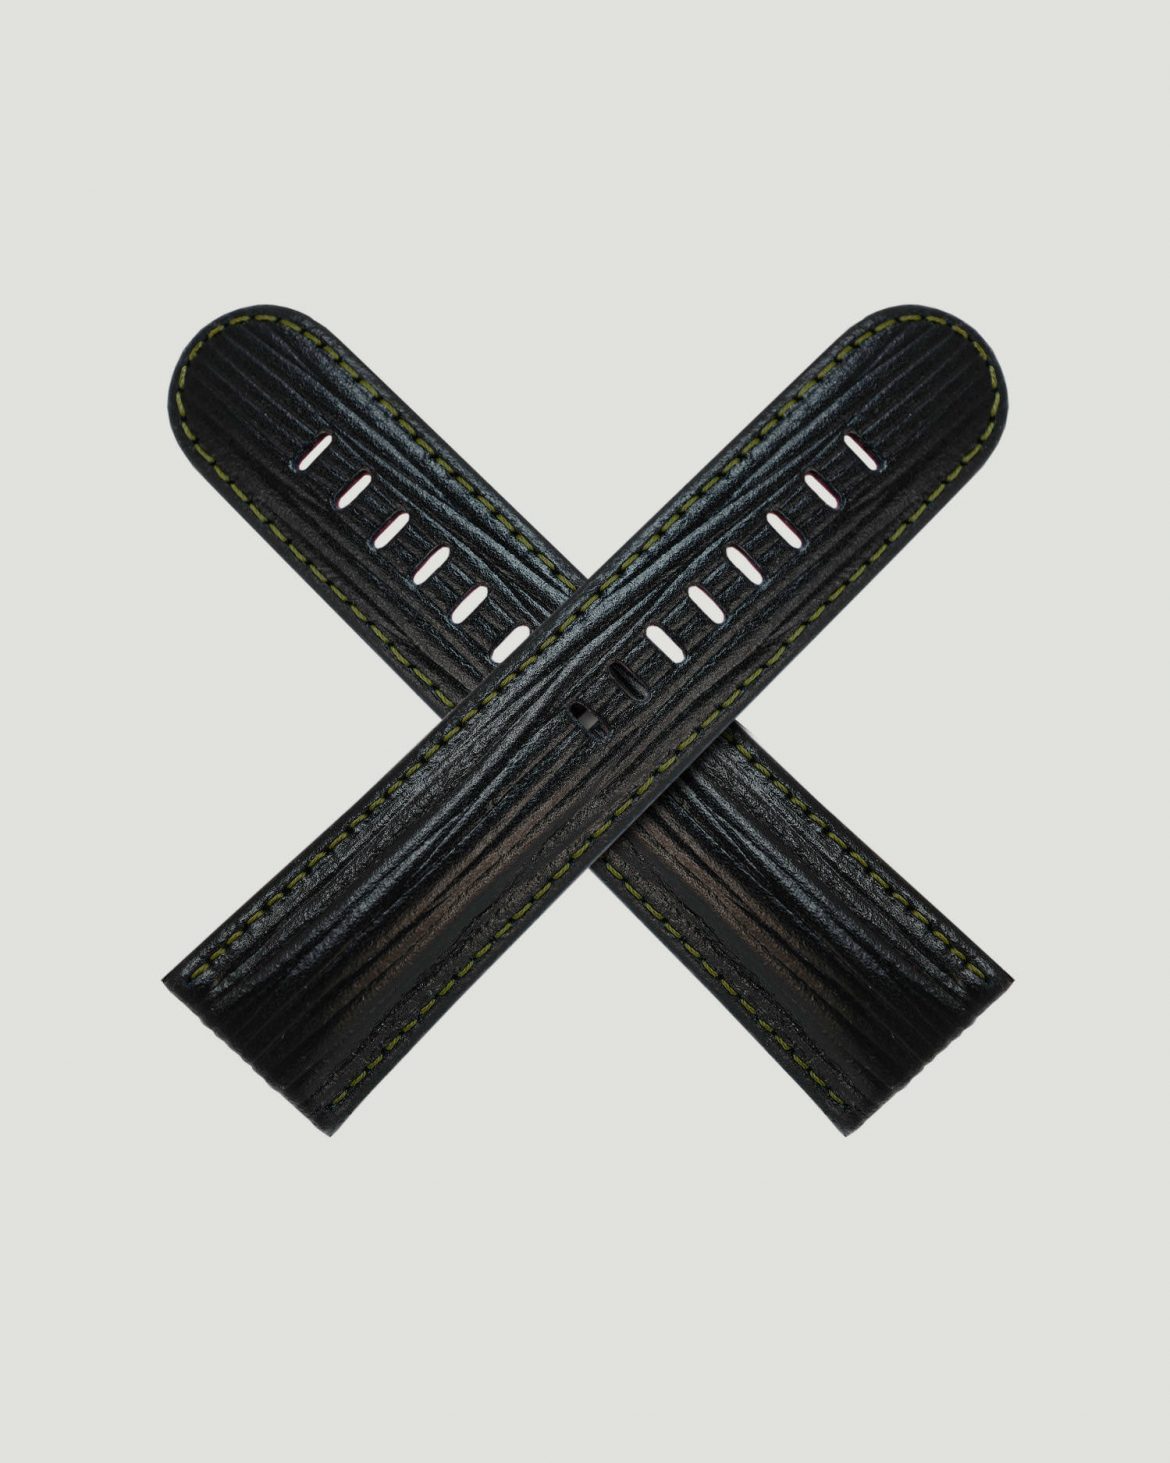 Lv Leather straps